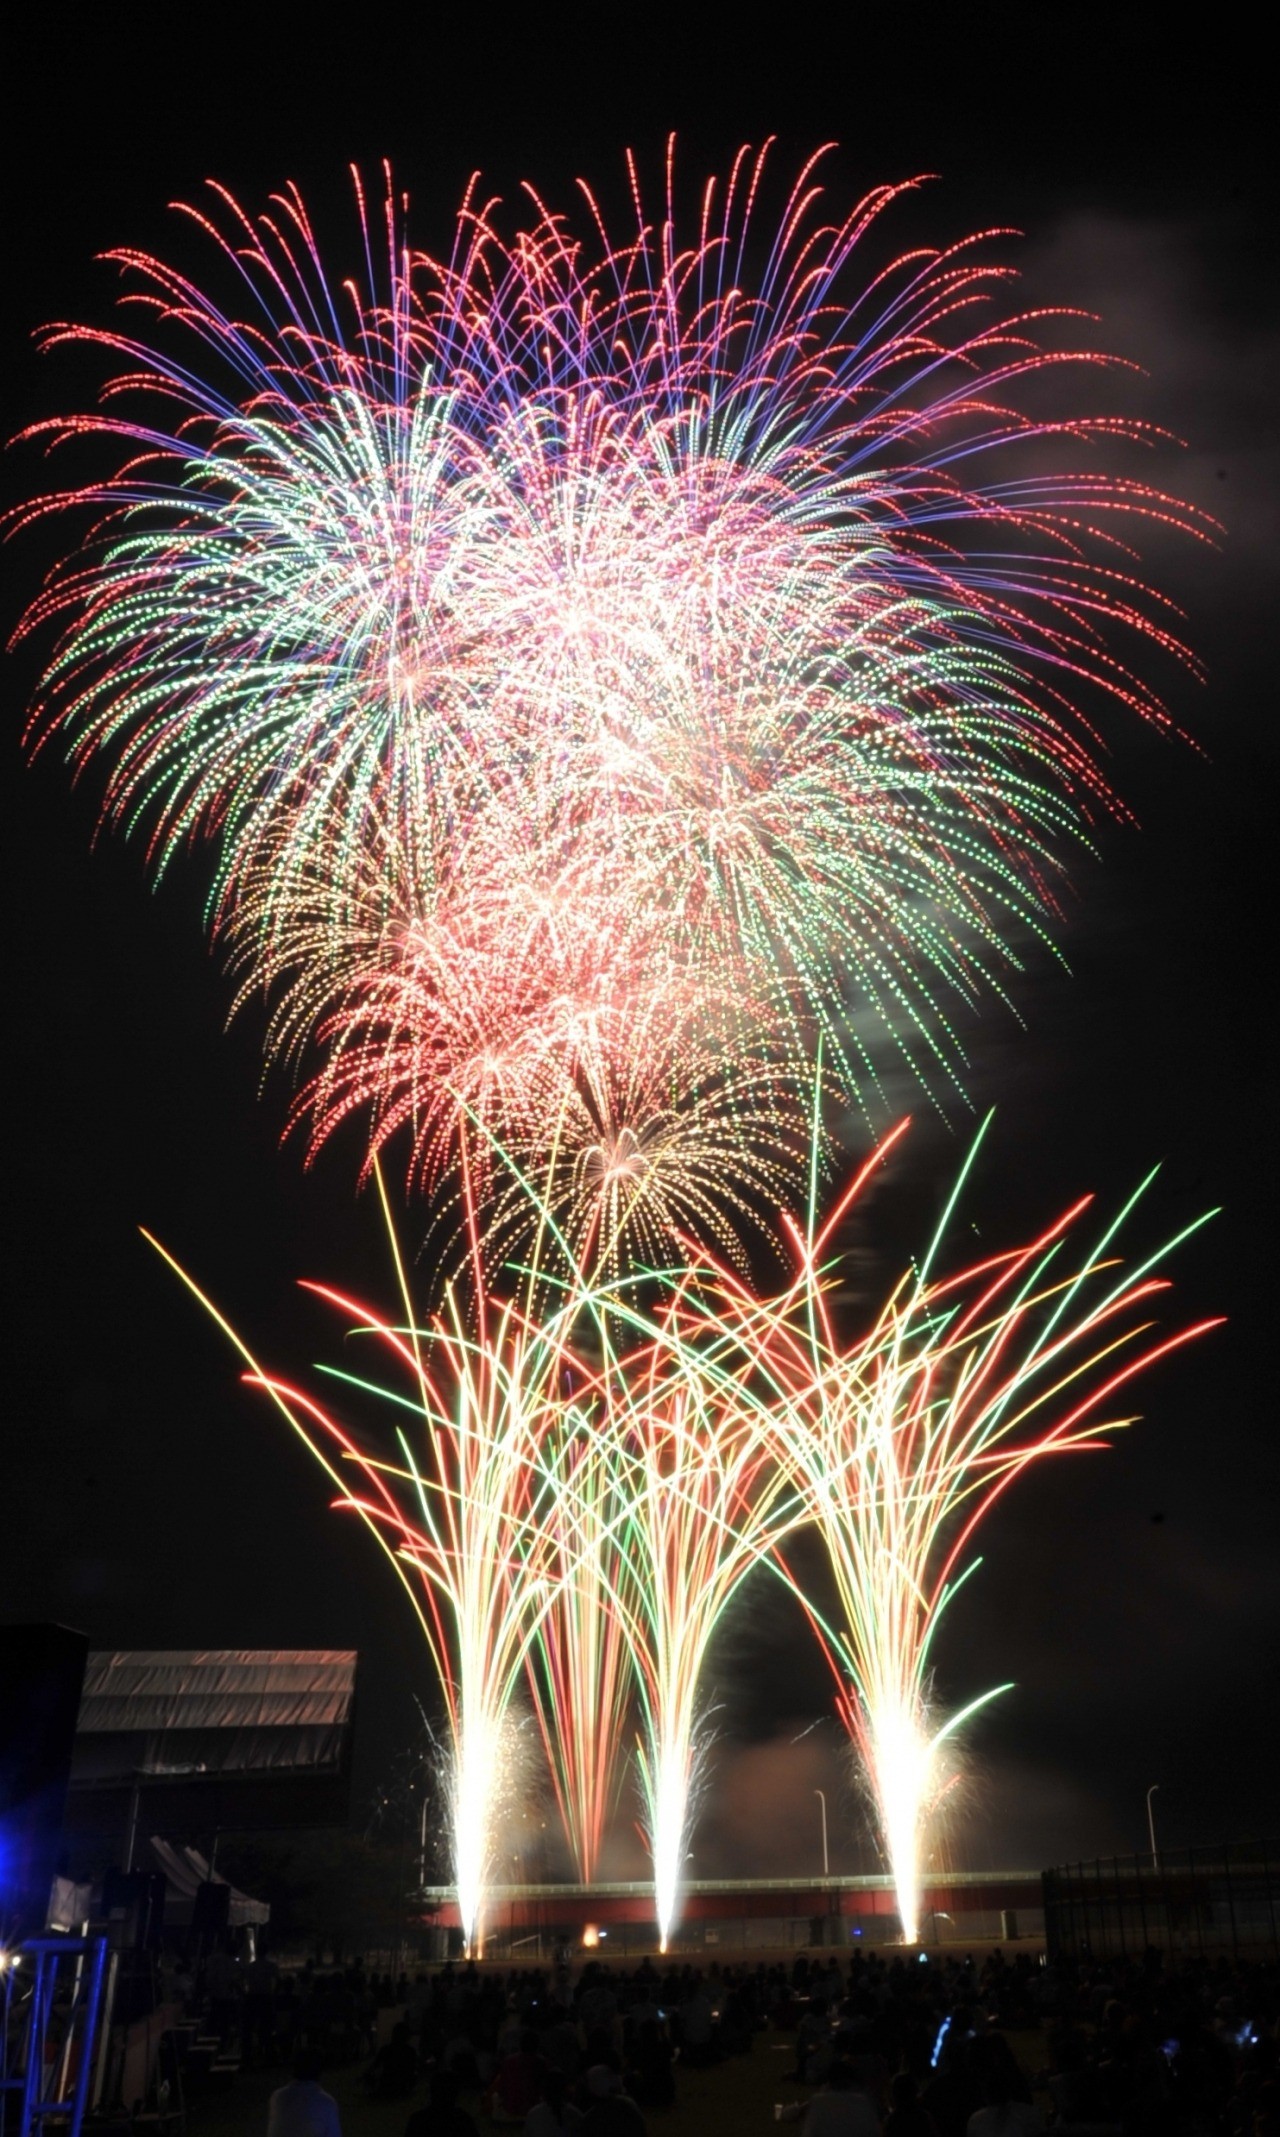 Ino Washiro Fireworks Festival